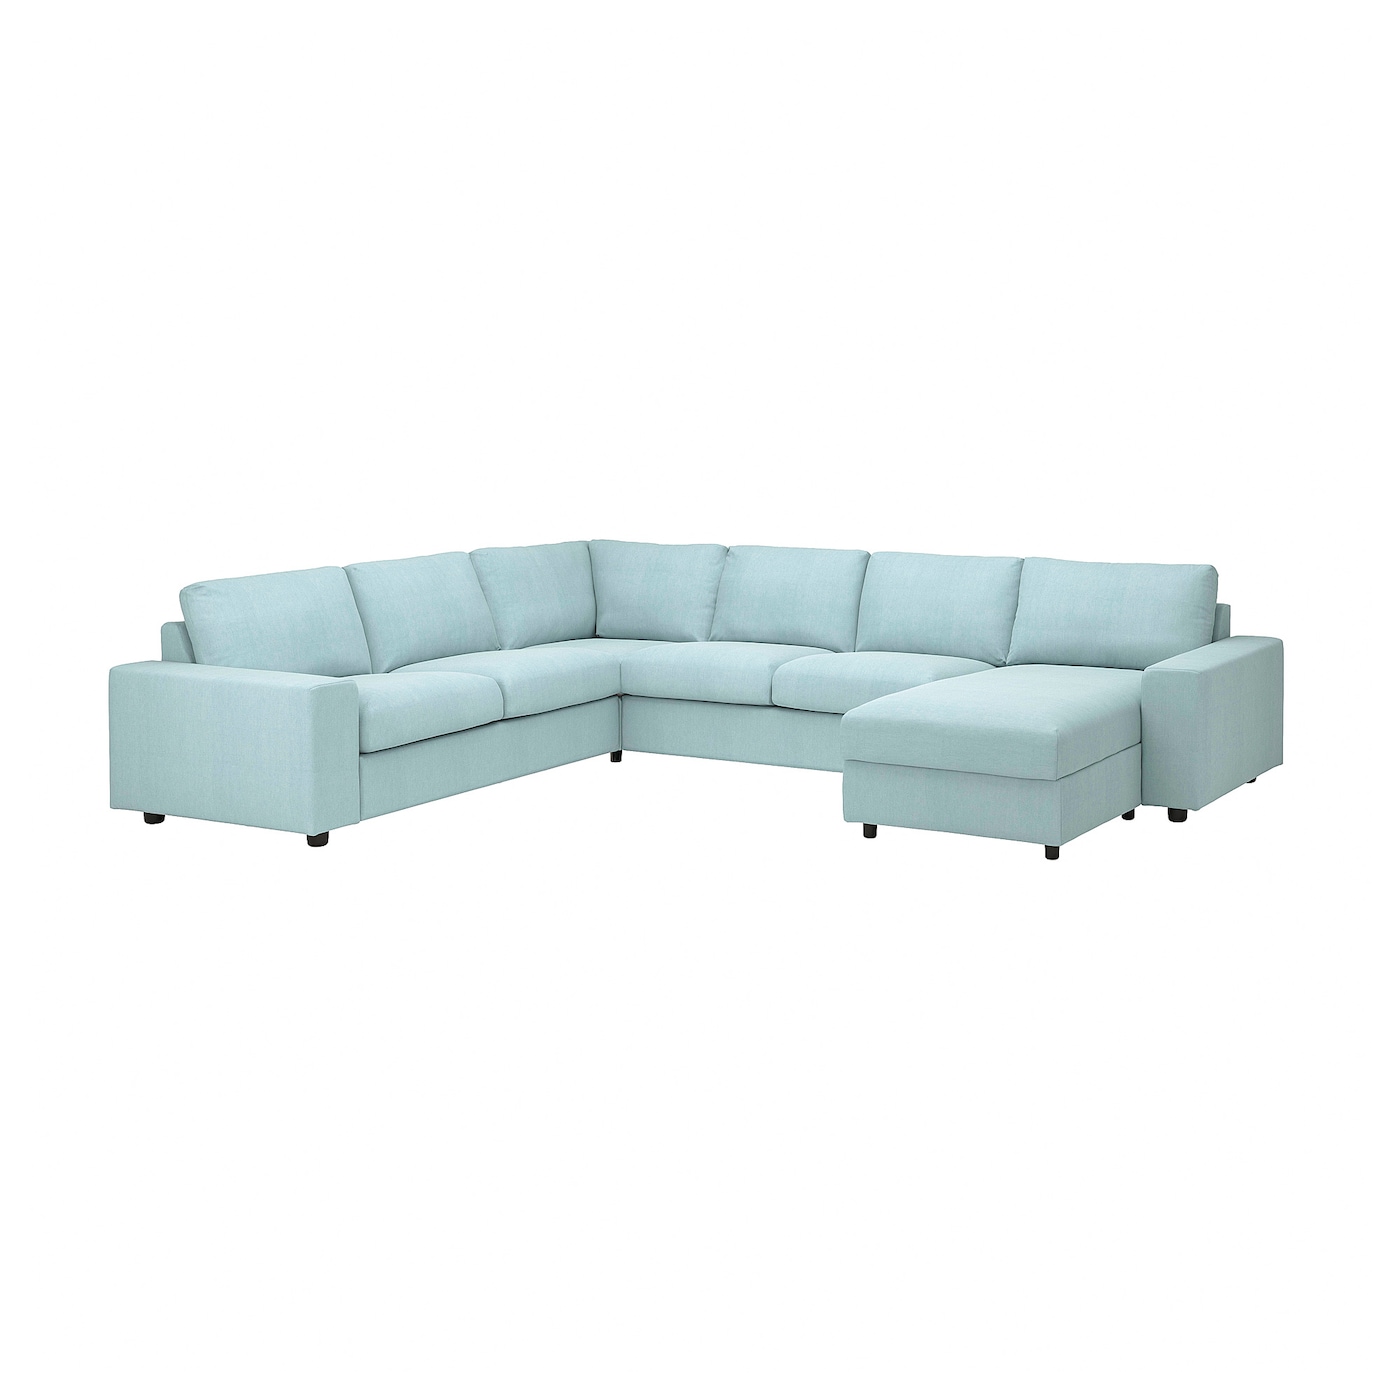 ВИМЛЕ Диван угловой, 5-местный. диван+диван, с широкими подлокотниками/Саксемара светло-синий VIMLE IKEA диван диван ру викс textile light